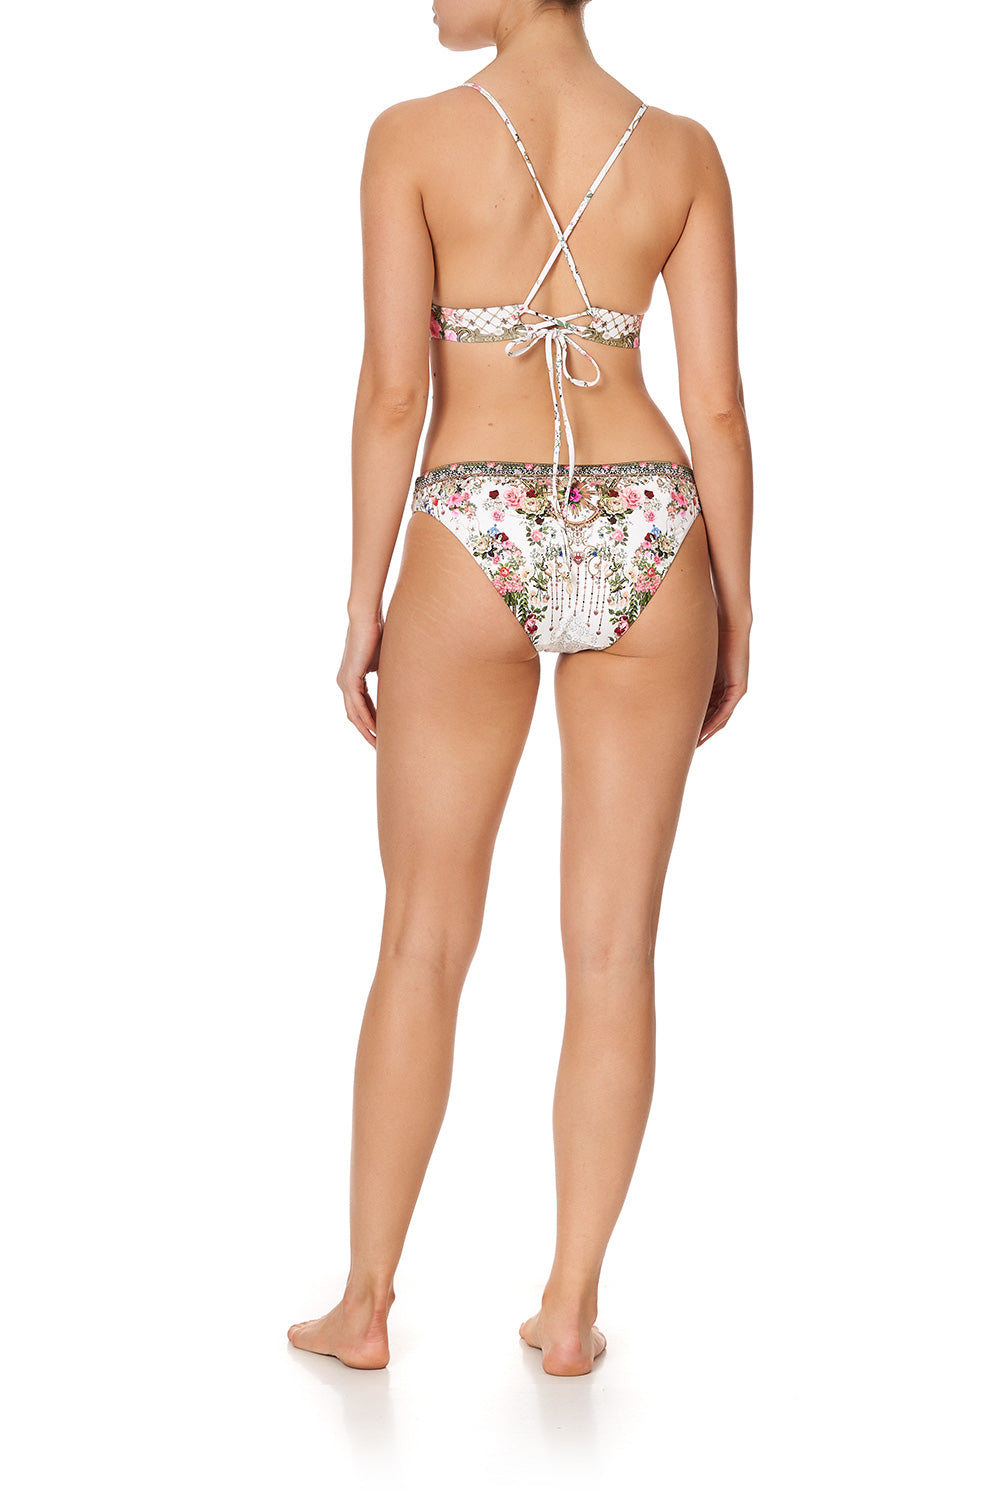 Camilla Swimwear Star Crossed Lovers Lace Back Tri Bra Bikini Top, C-D Cup